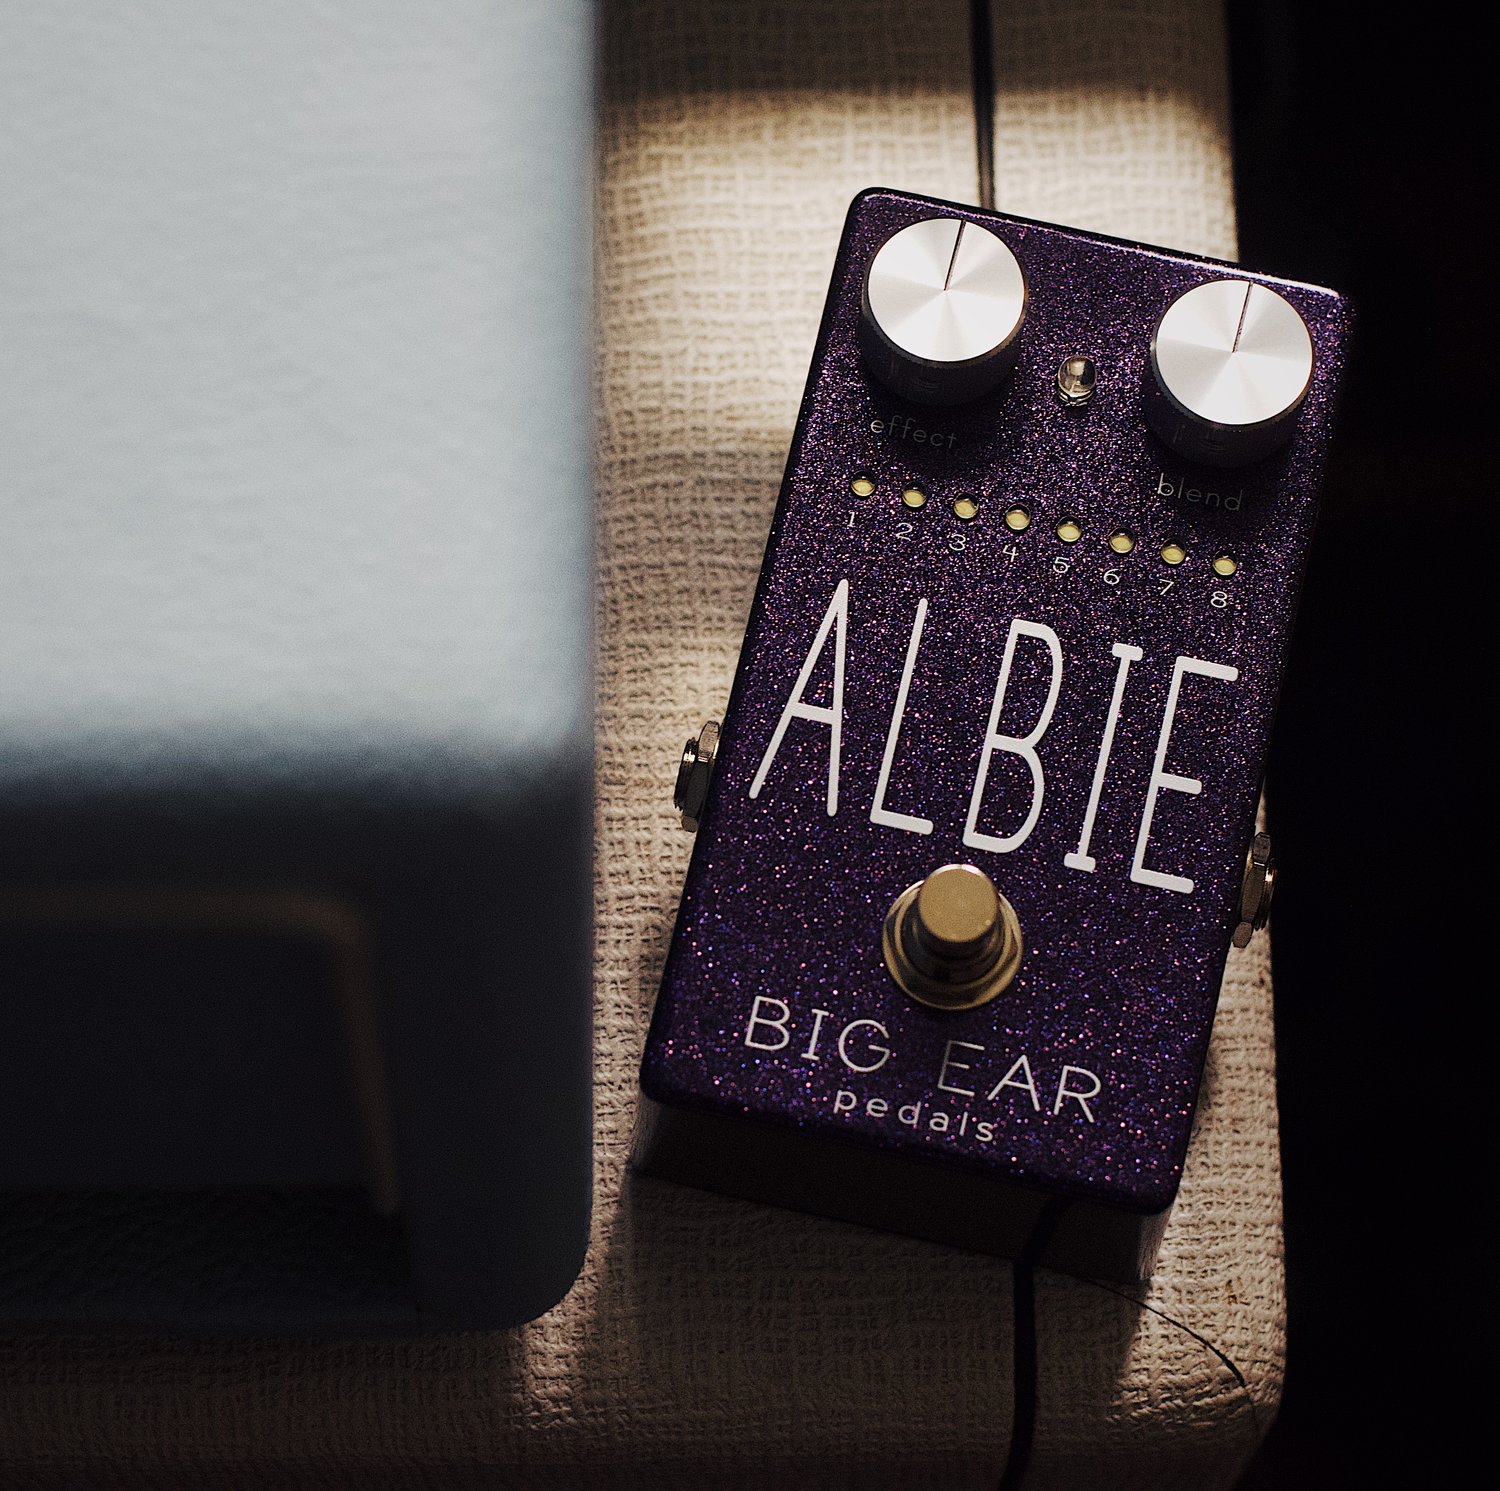 Image of Big Ear Pedals ALBIE - exclusive sparkle purple